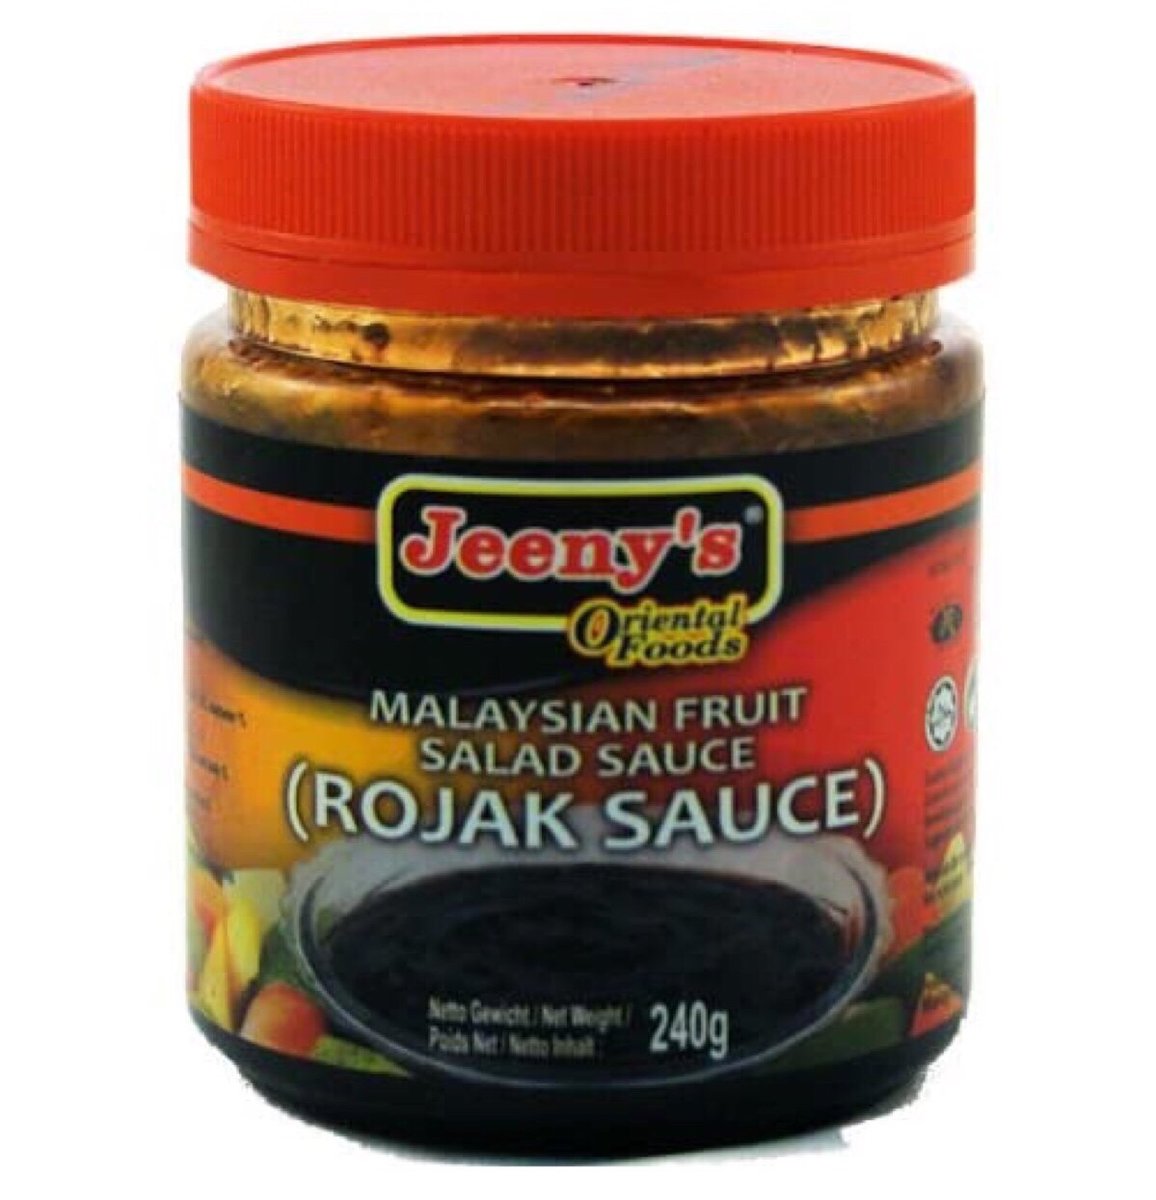 Malaysian Fruit Salad Sauce Rojak Sauce 240g by Jeeny's